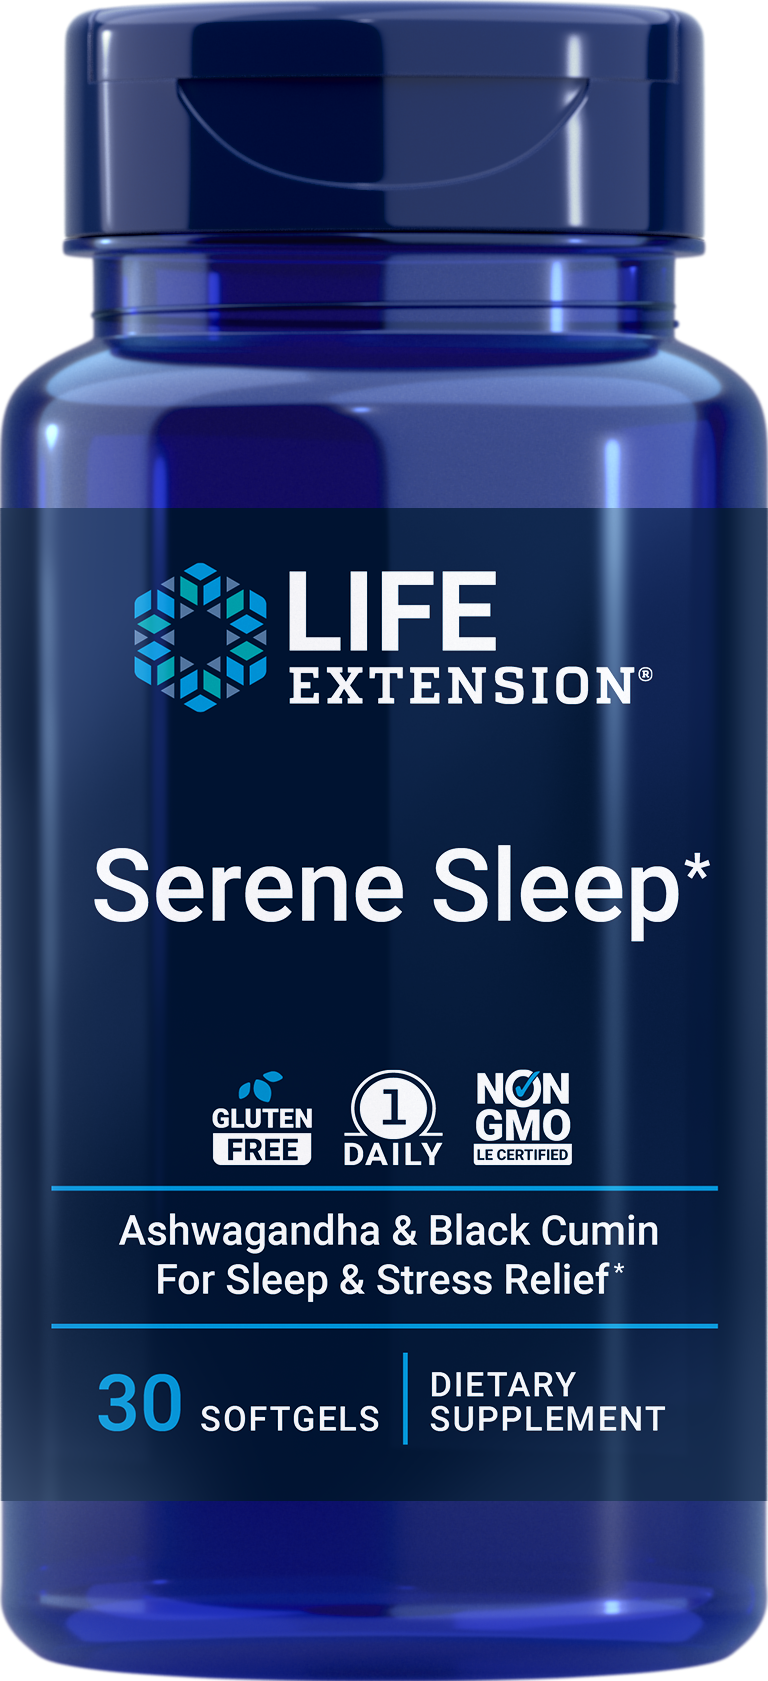 Serene Sleep, 30 gluten-free softgels with ashwagandha & black cumin shown to promote stress relief & restorative sleep